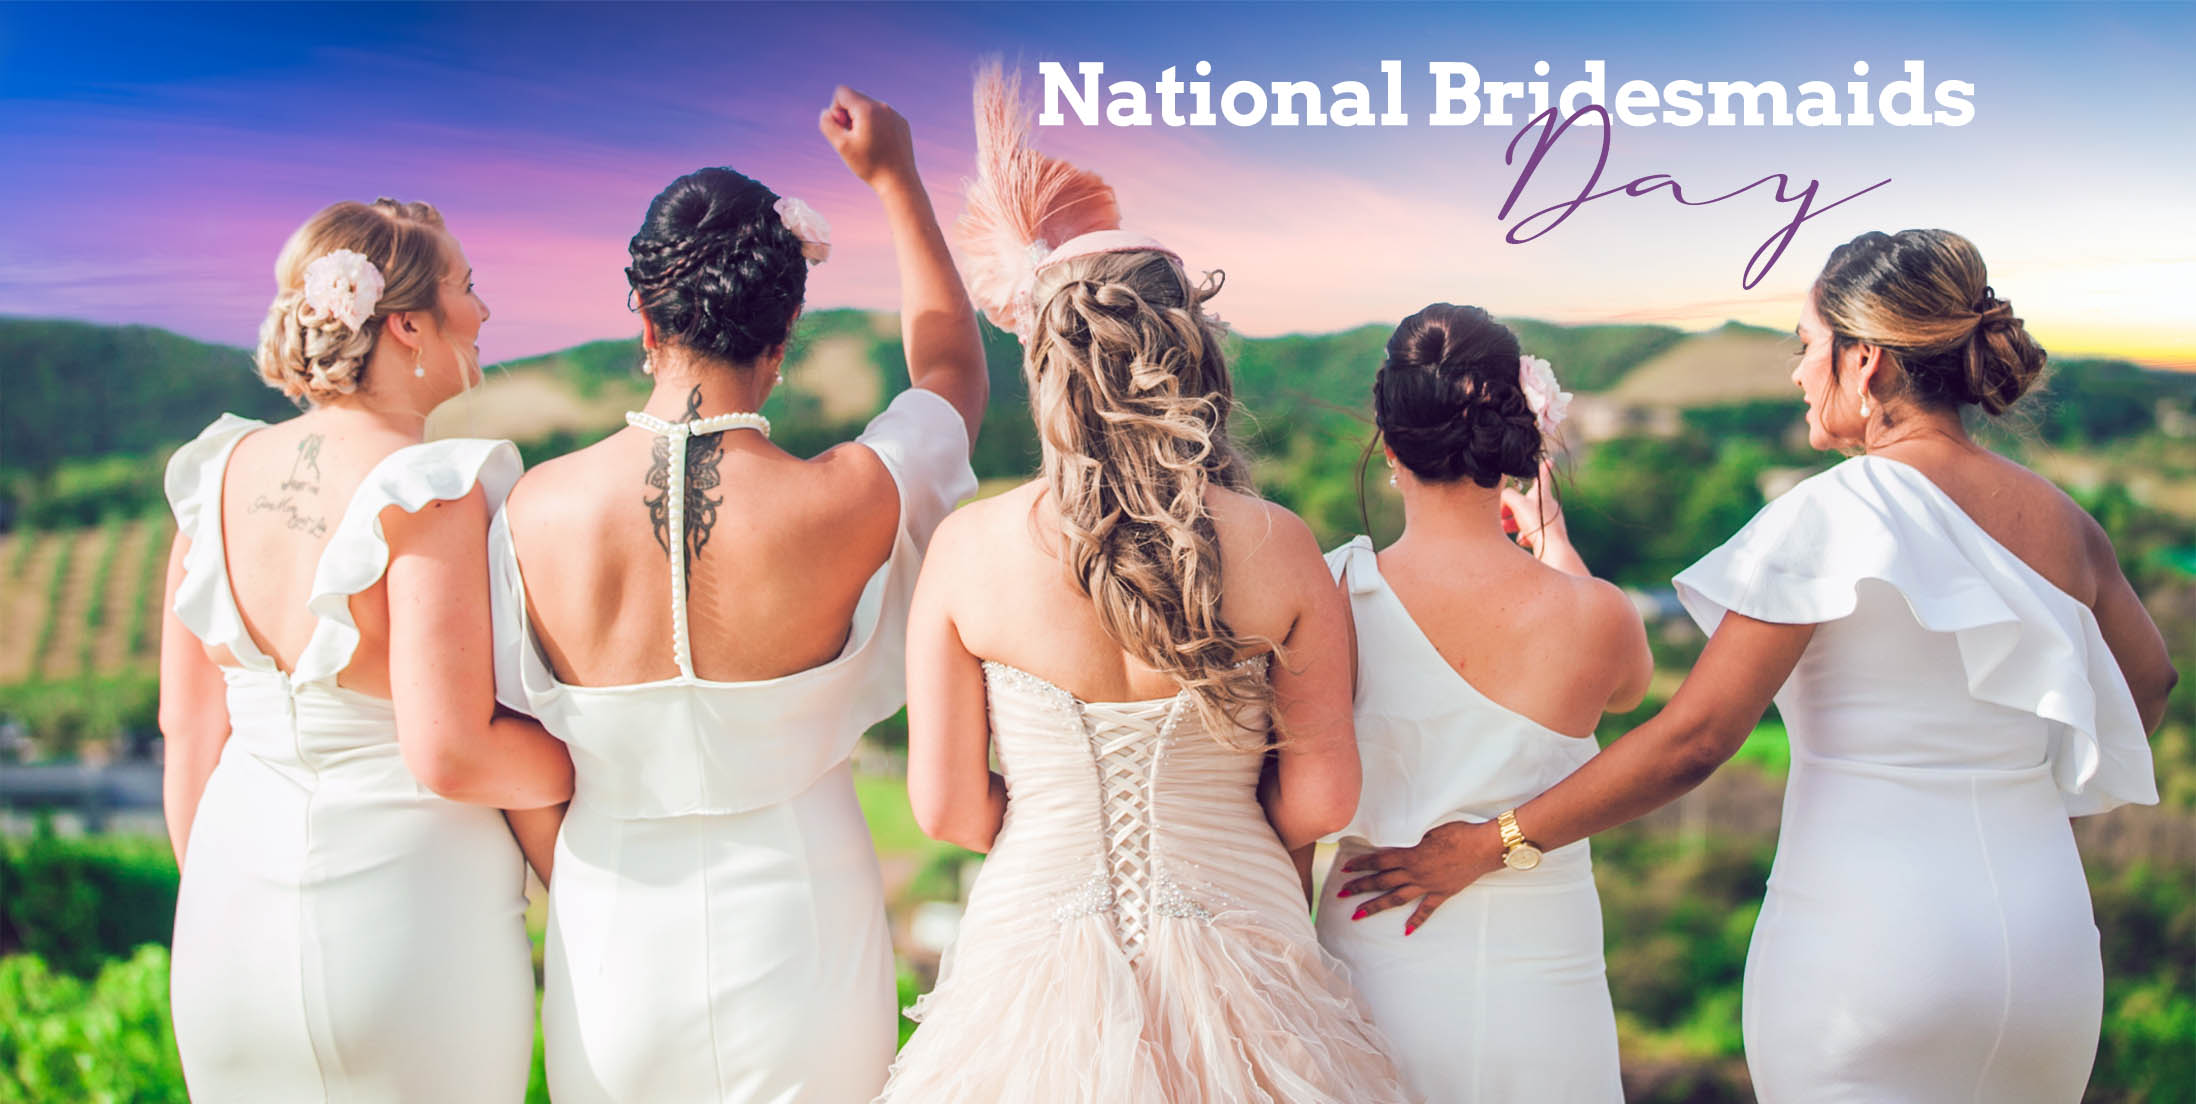 National Bridesmaids Day